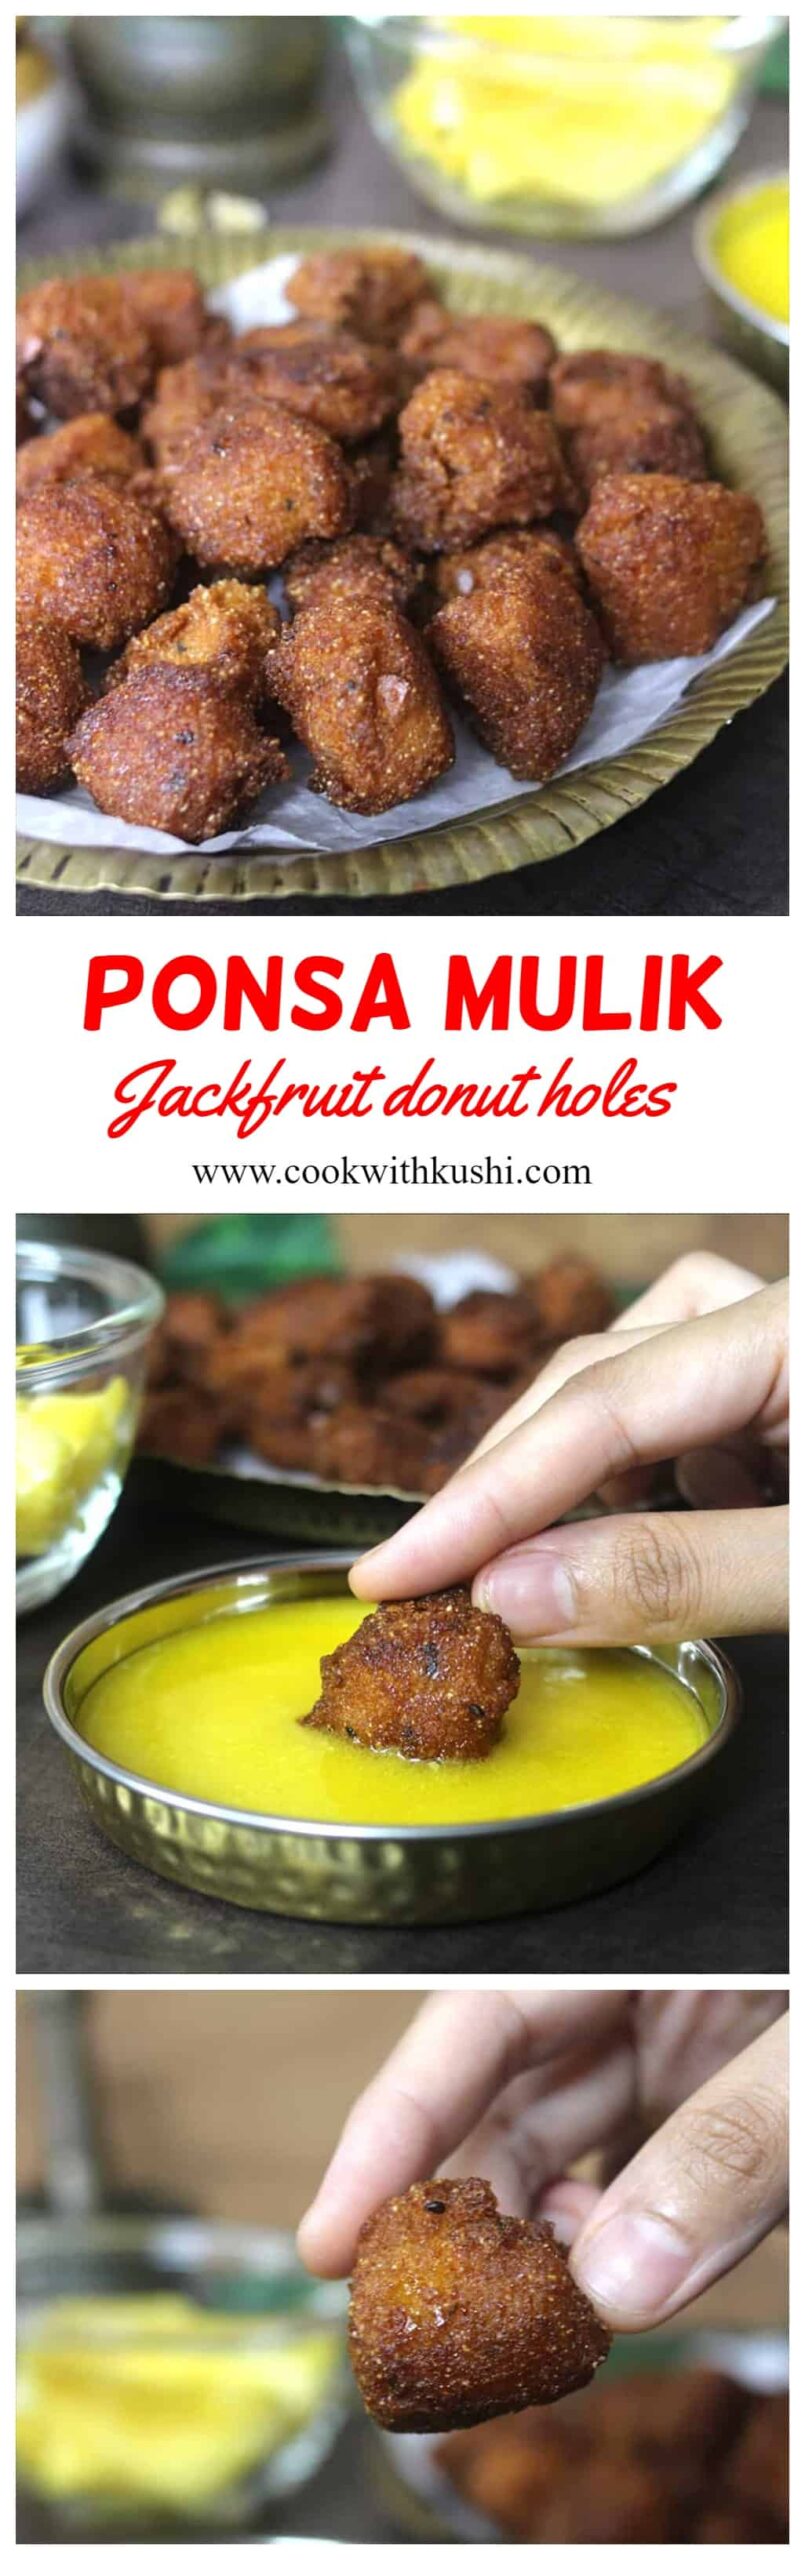 How to make ponsa mulik at home, #jackfruitrecipes #indiansweets